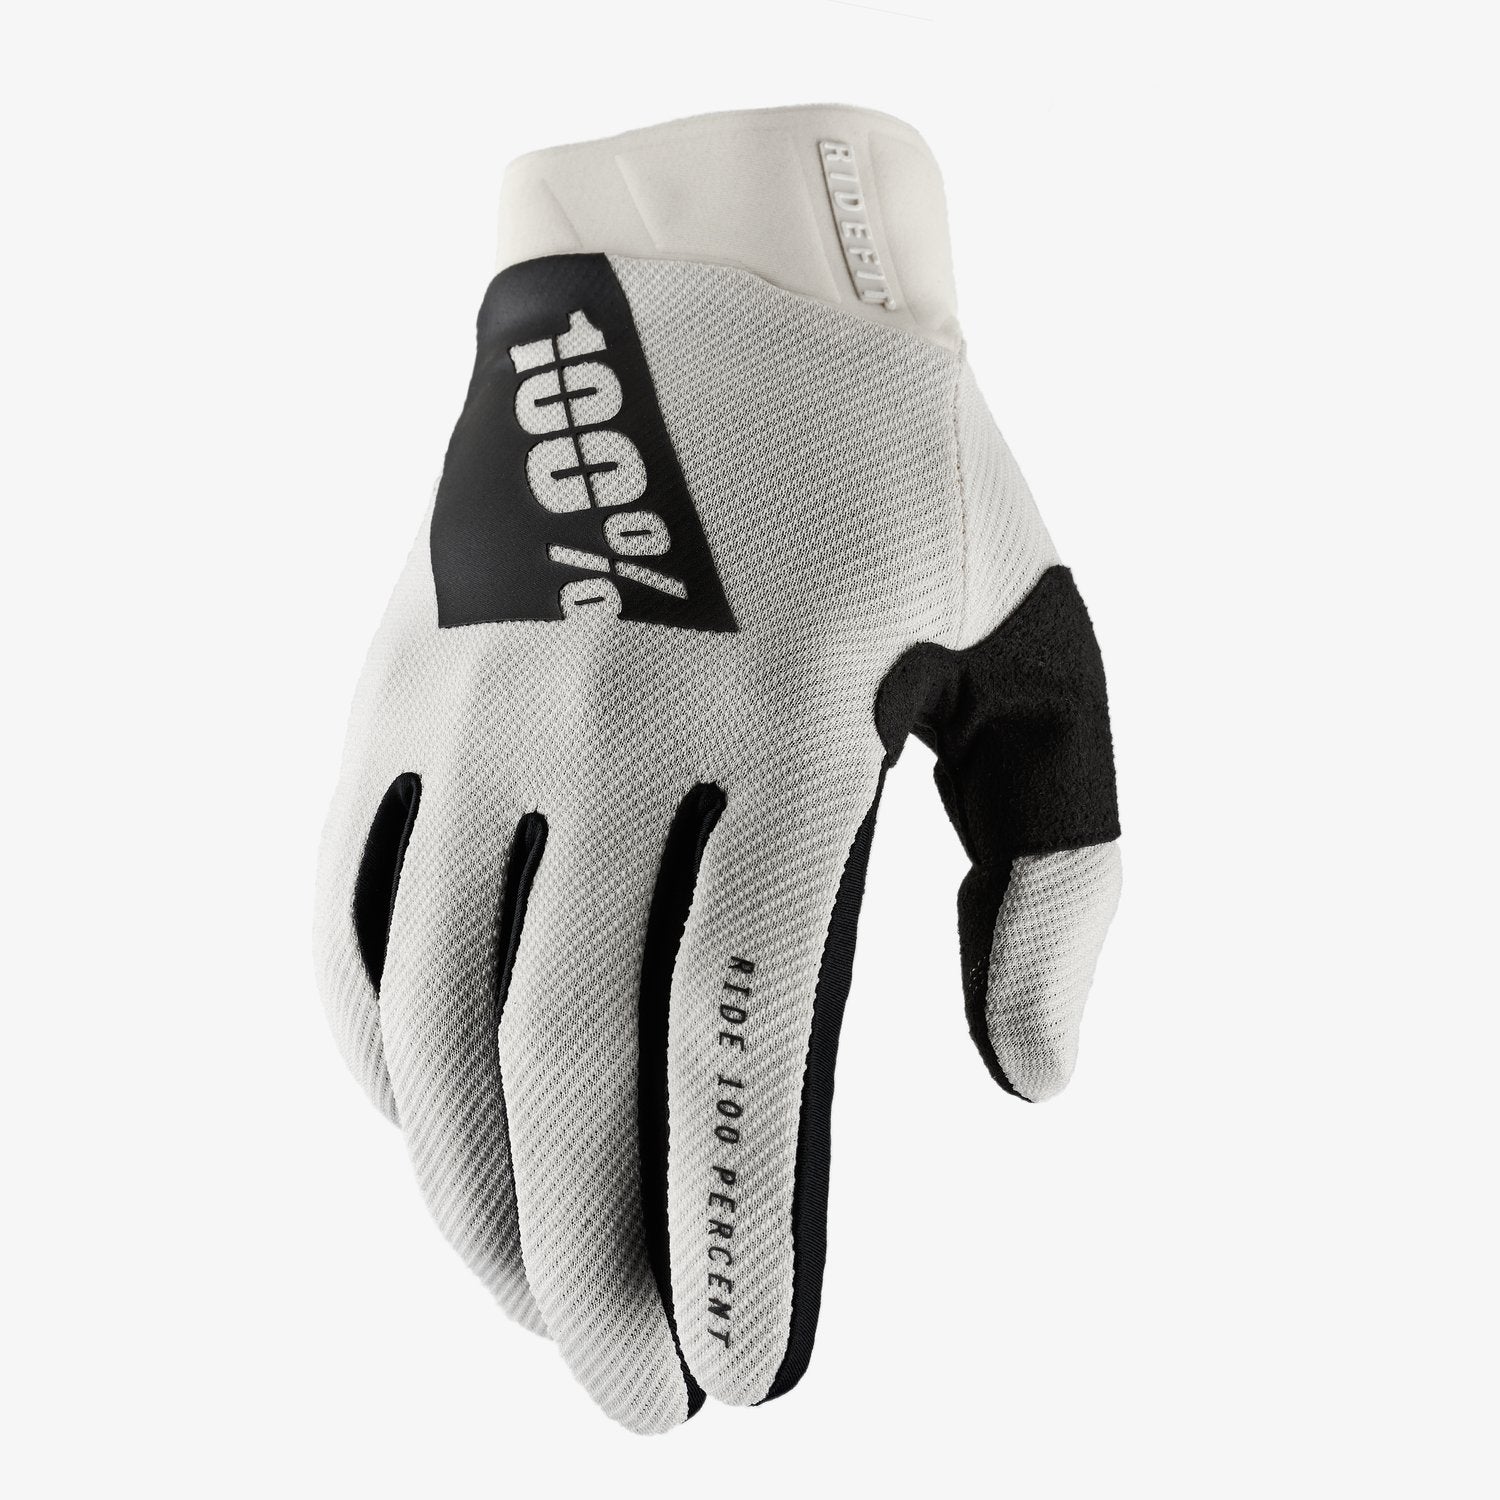 100% - Ridefit Gloves